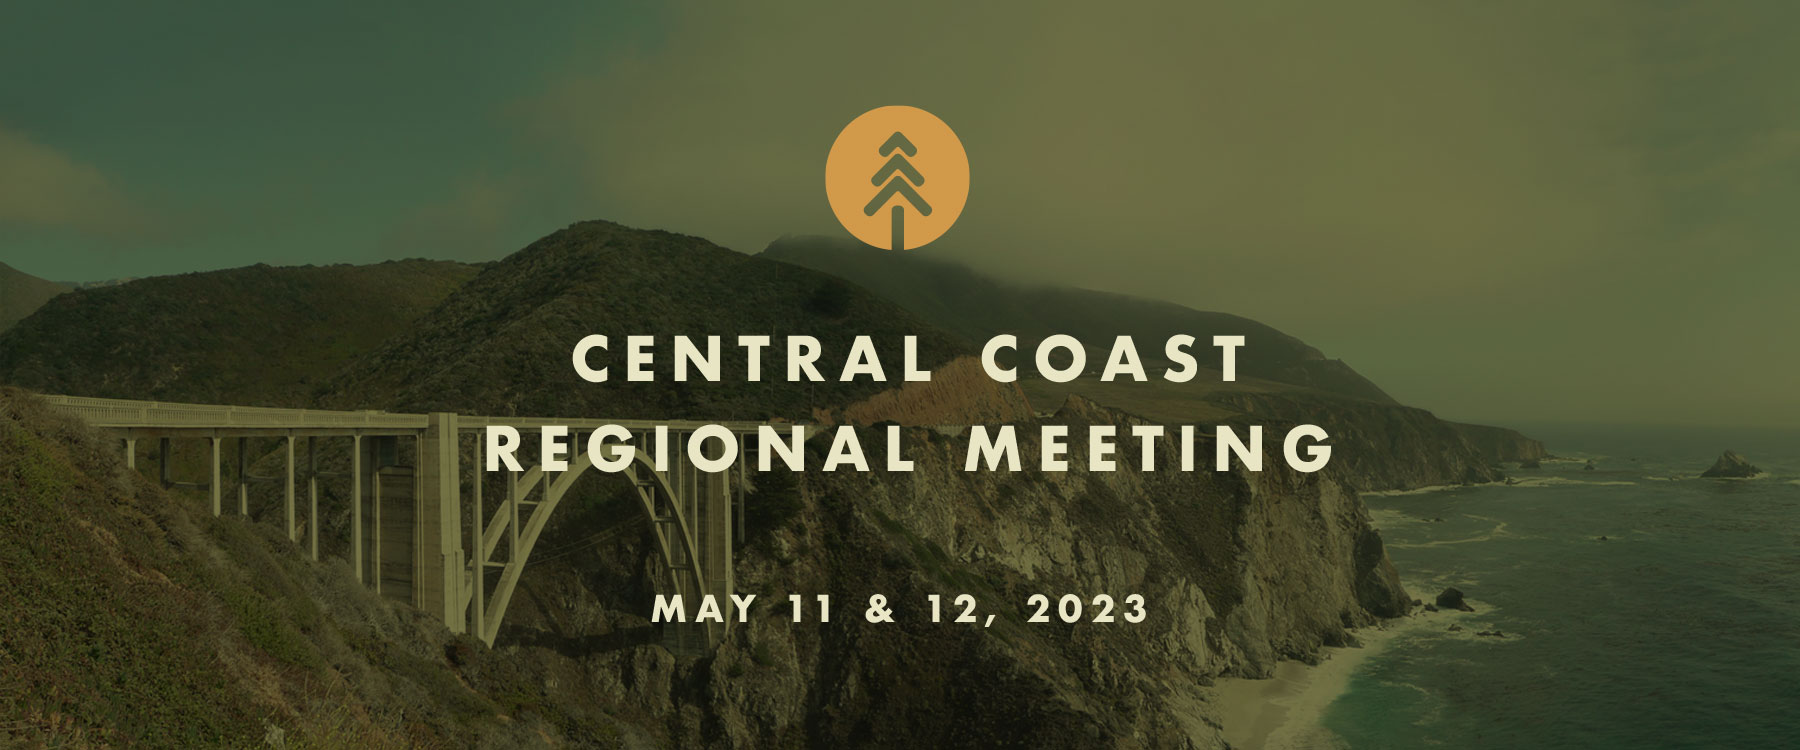 Central Coast Regional Meeting (May 11 & 12, 2023) Header